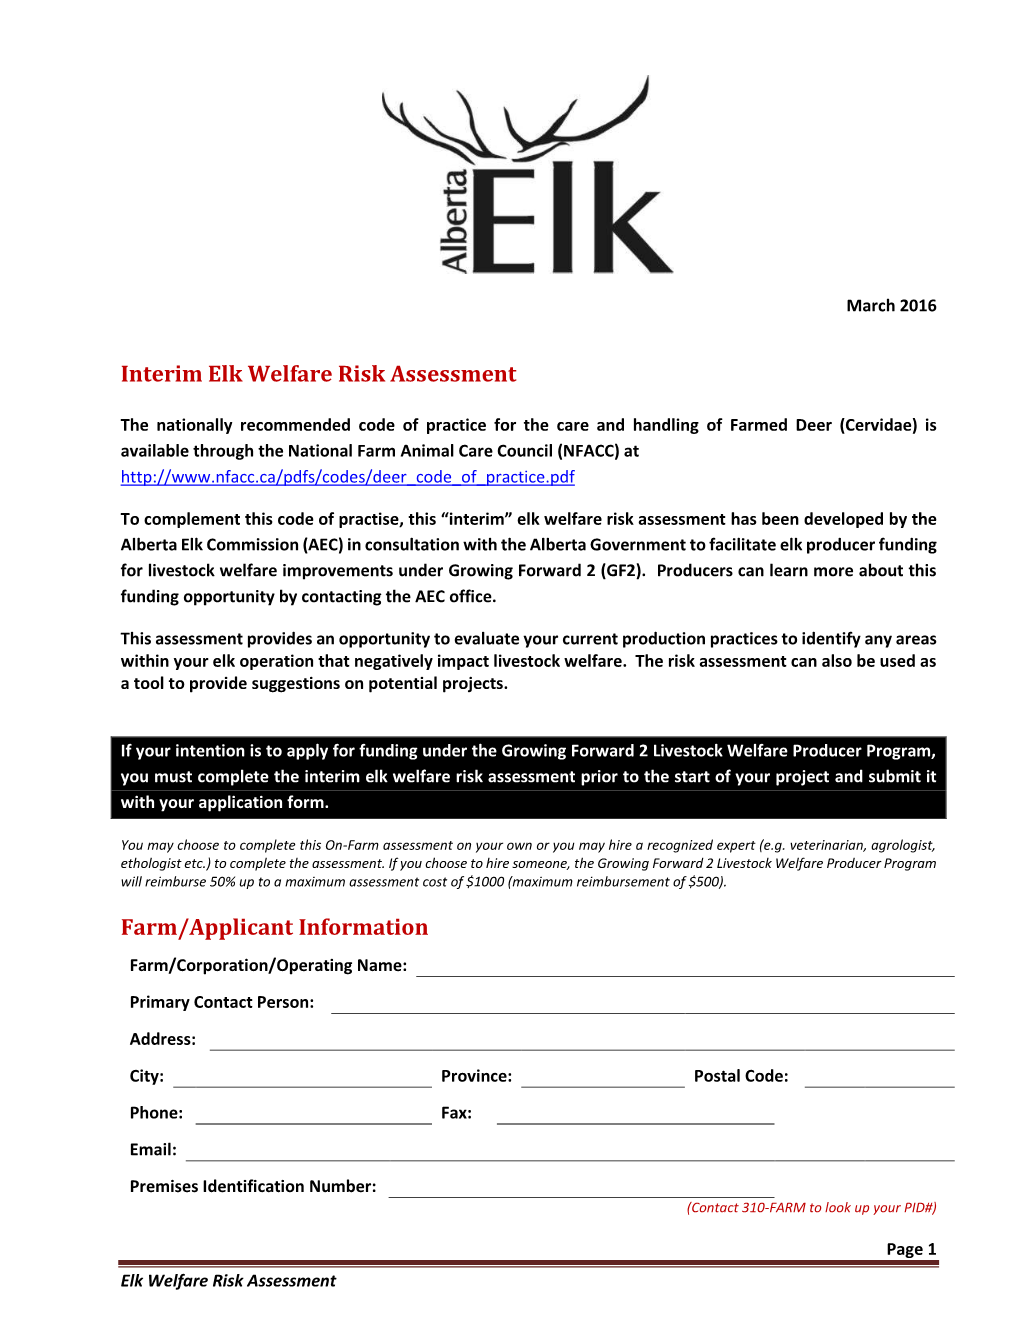 Interim Elk Welfare Risk Assessment Farm/Applicant Information